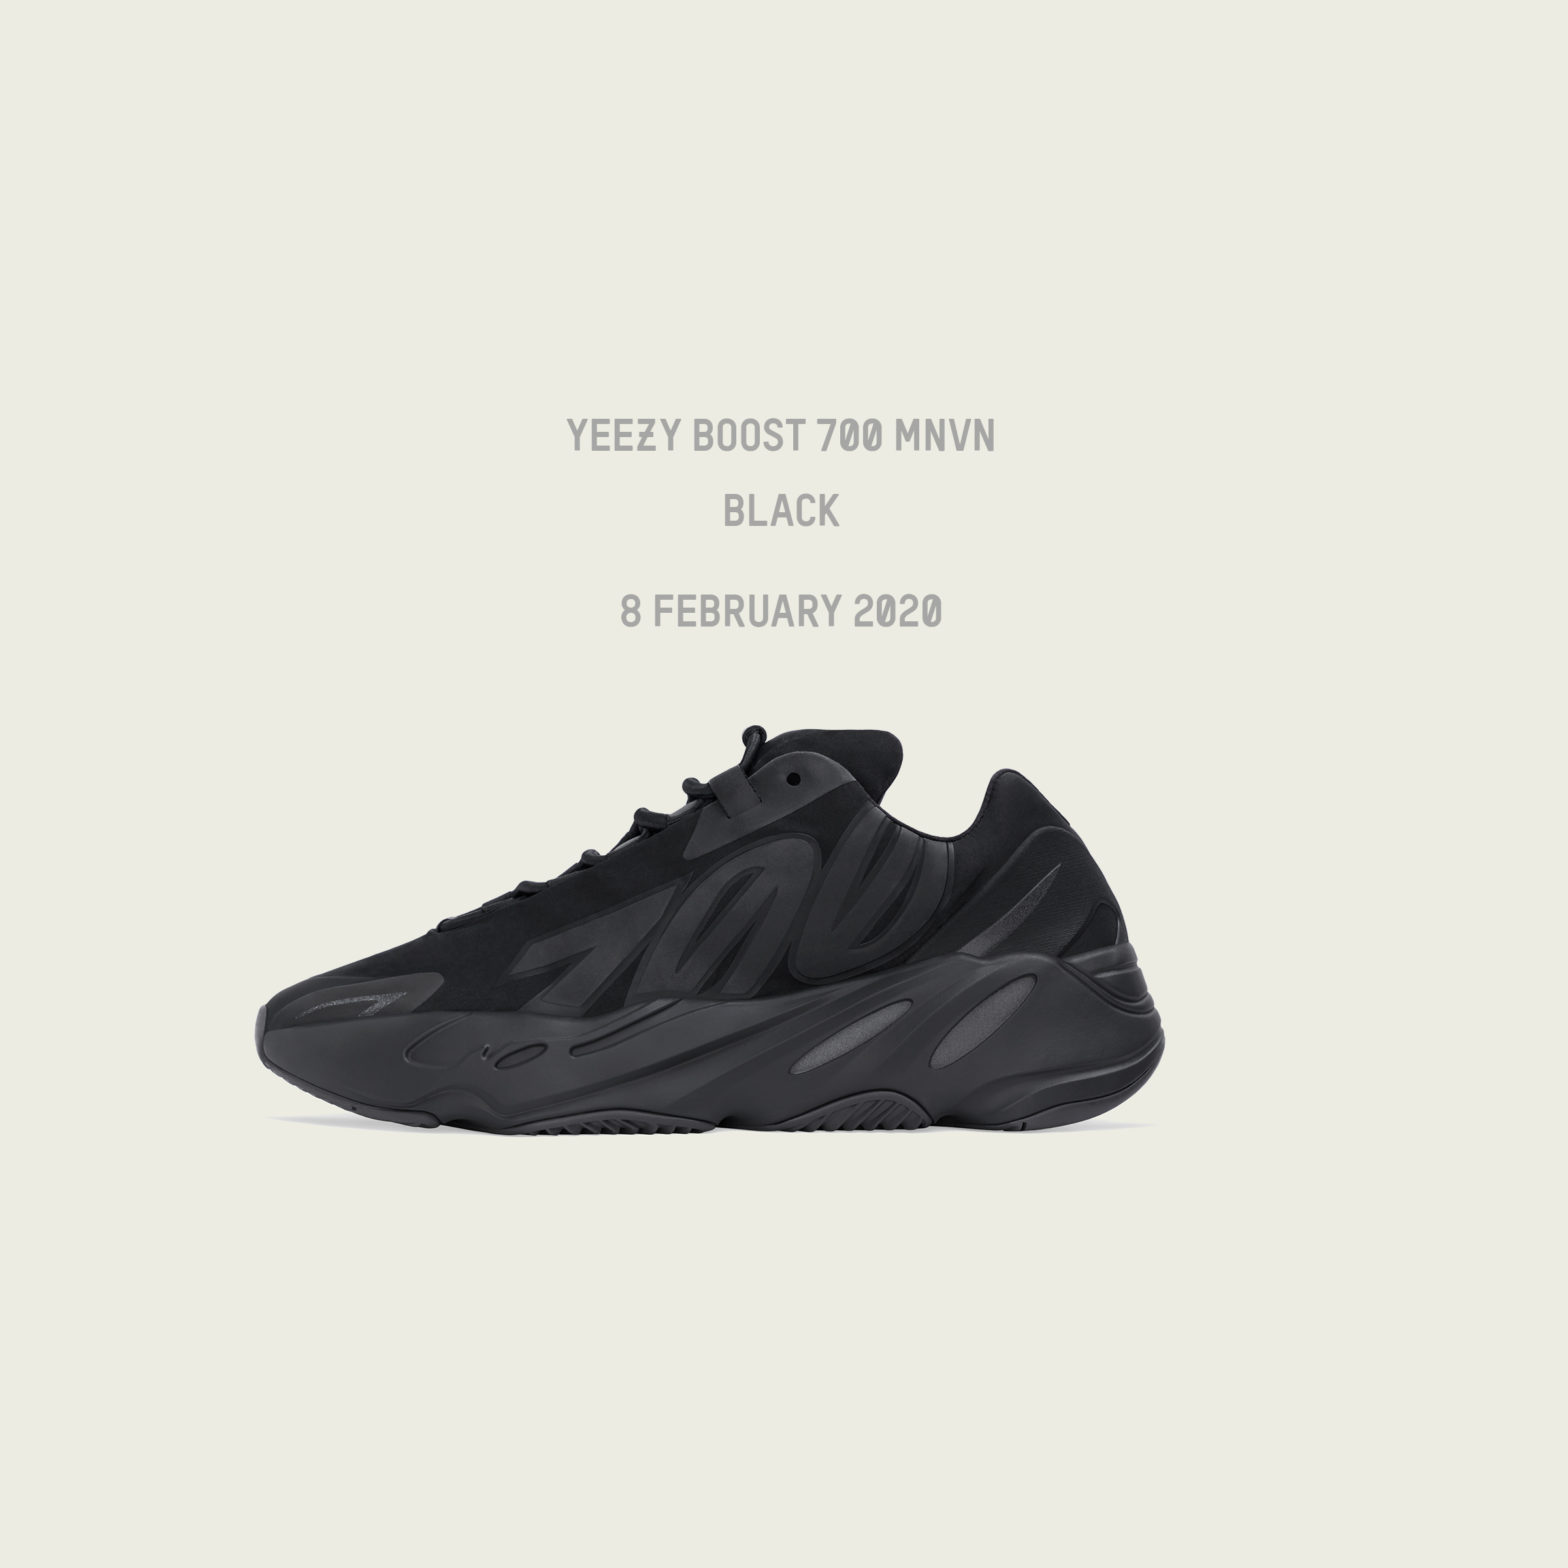 adidas YEEZY BOOST 700 MNVN “BLACK” “KANYE WEST” mita sneakers Draw